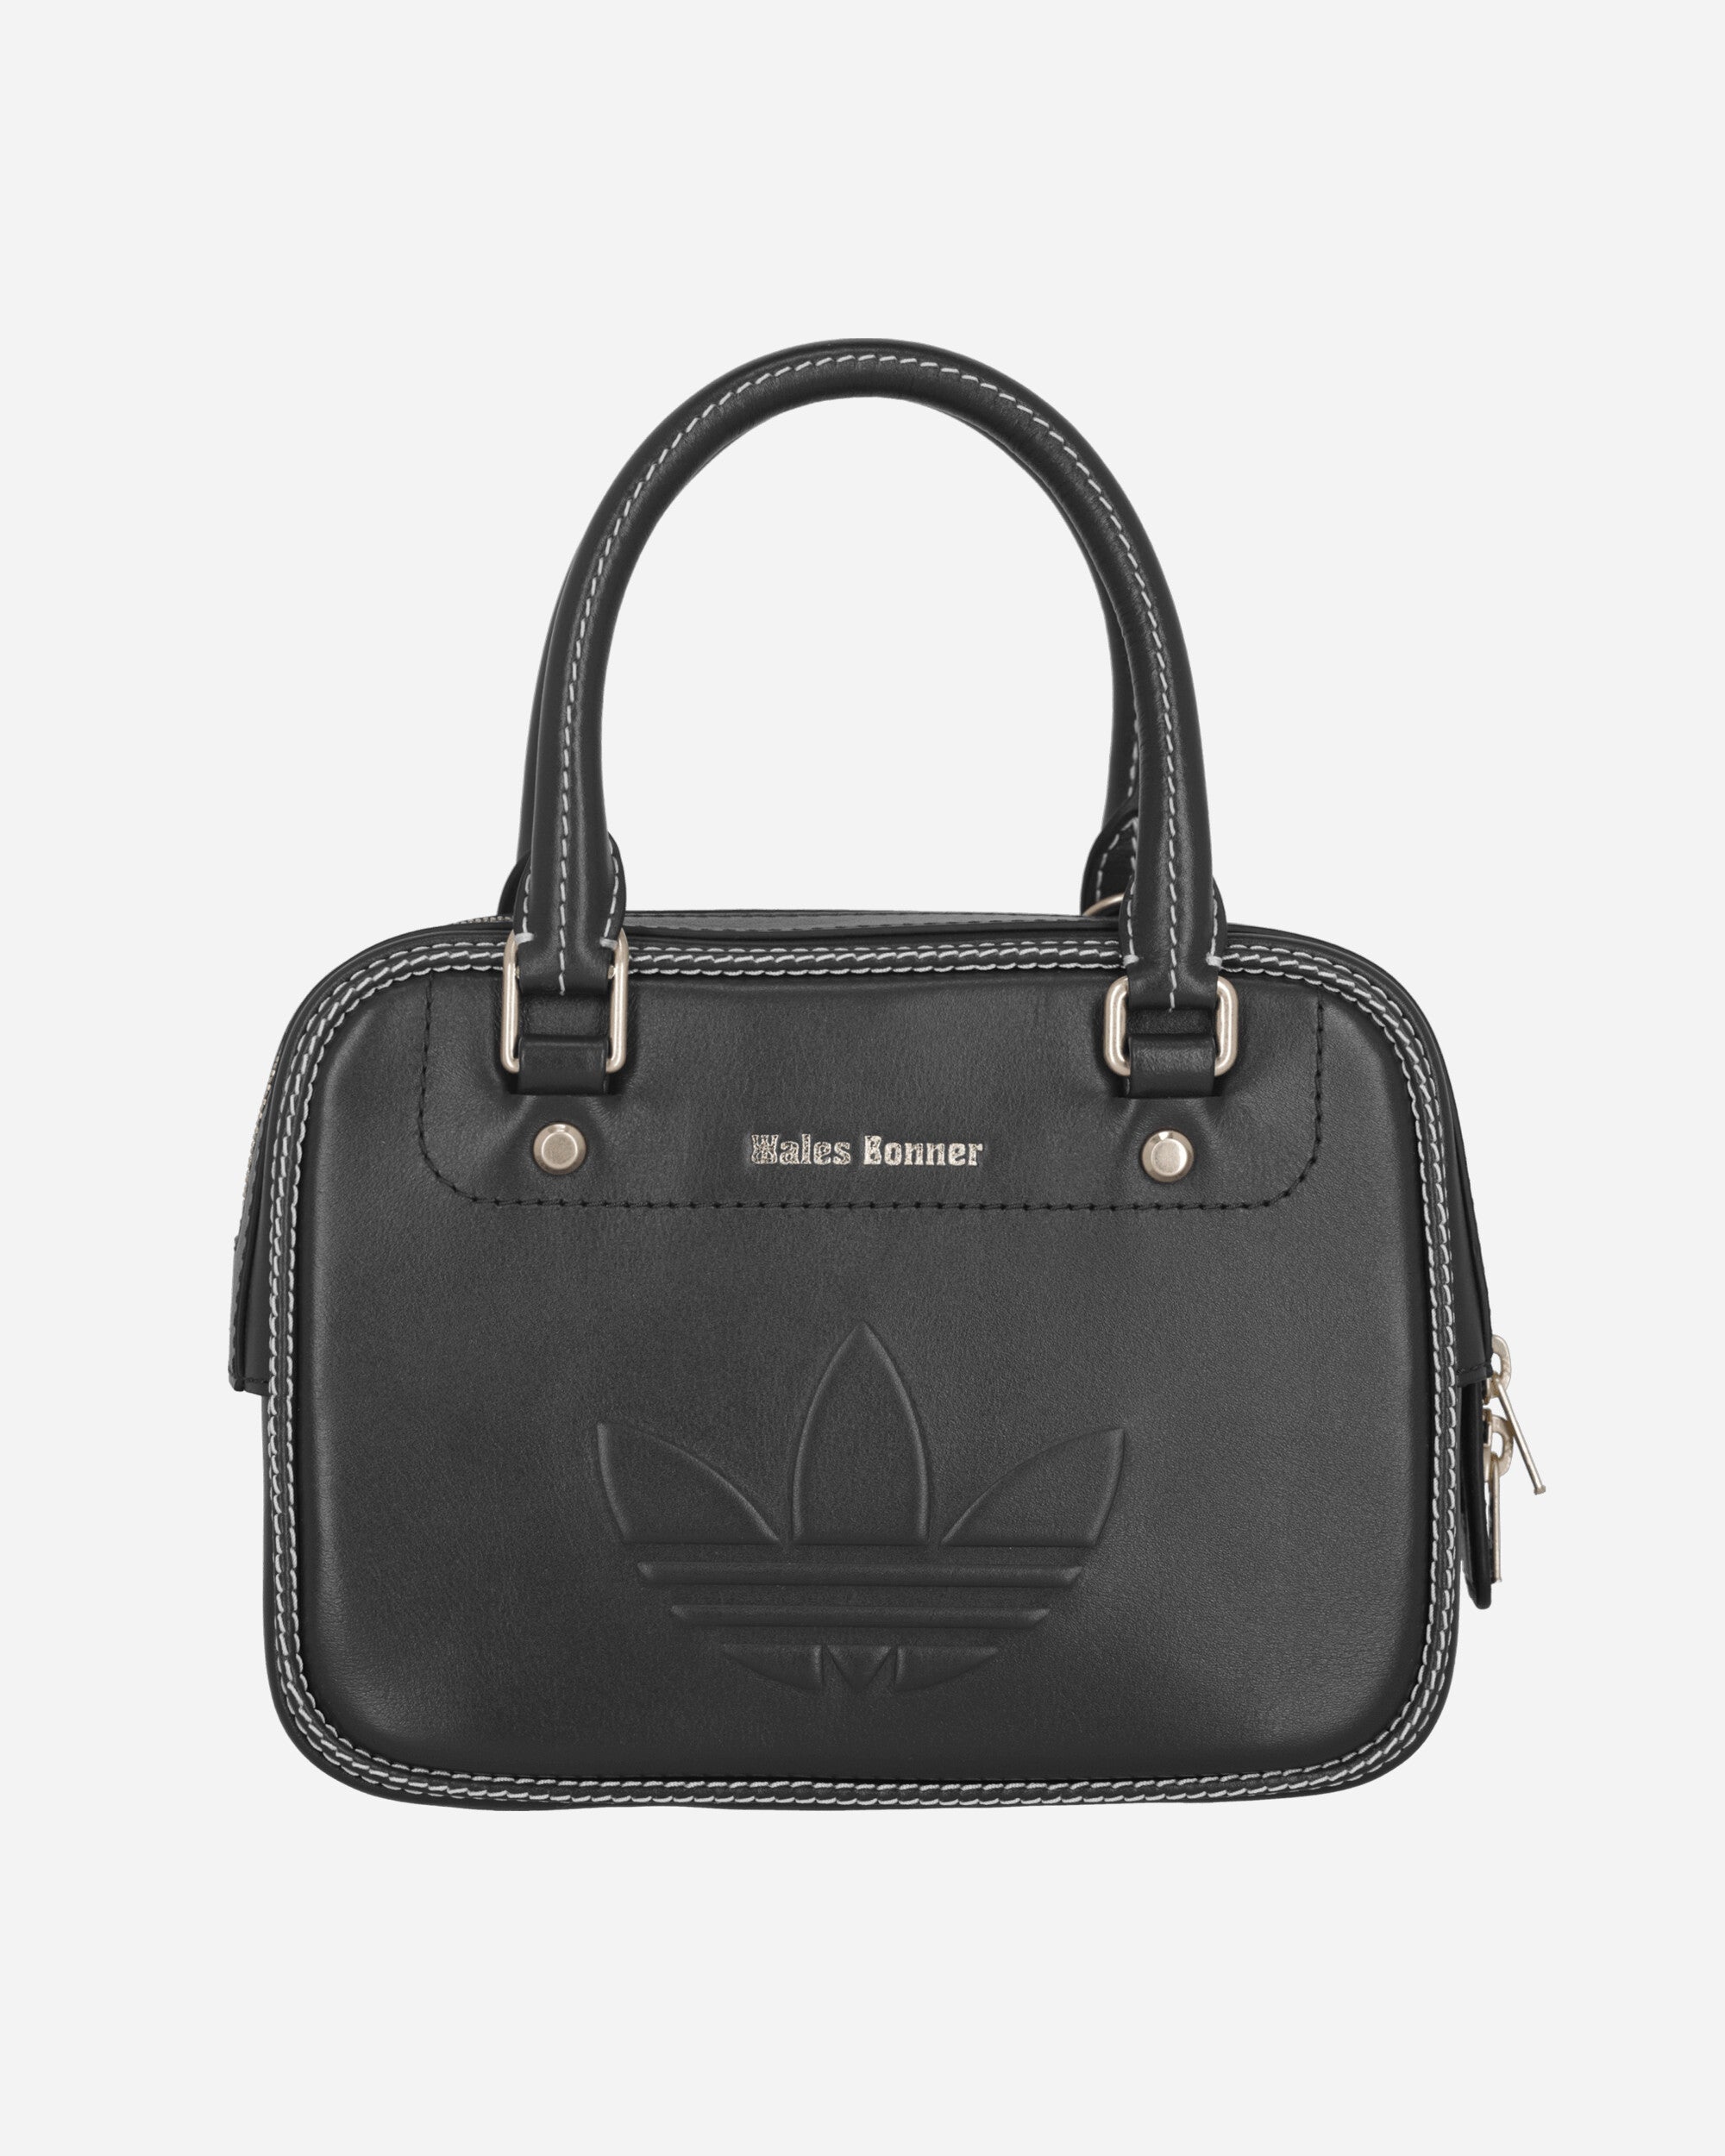 Adidas Originals Wales Bonner Small Bag Night In Black